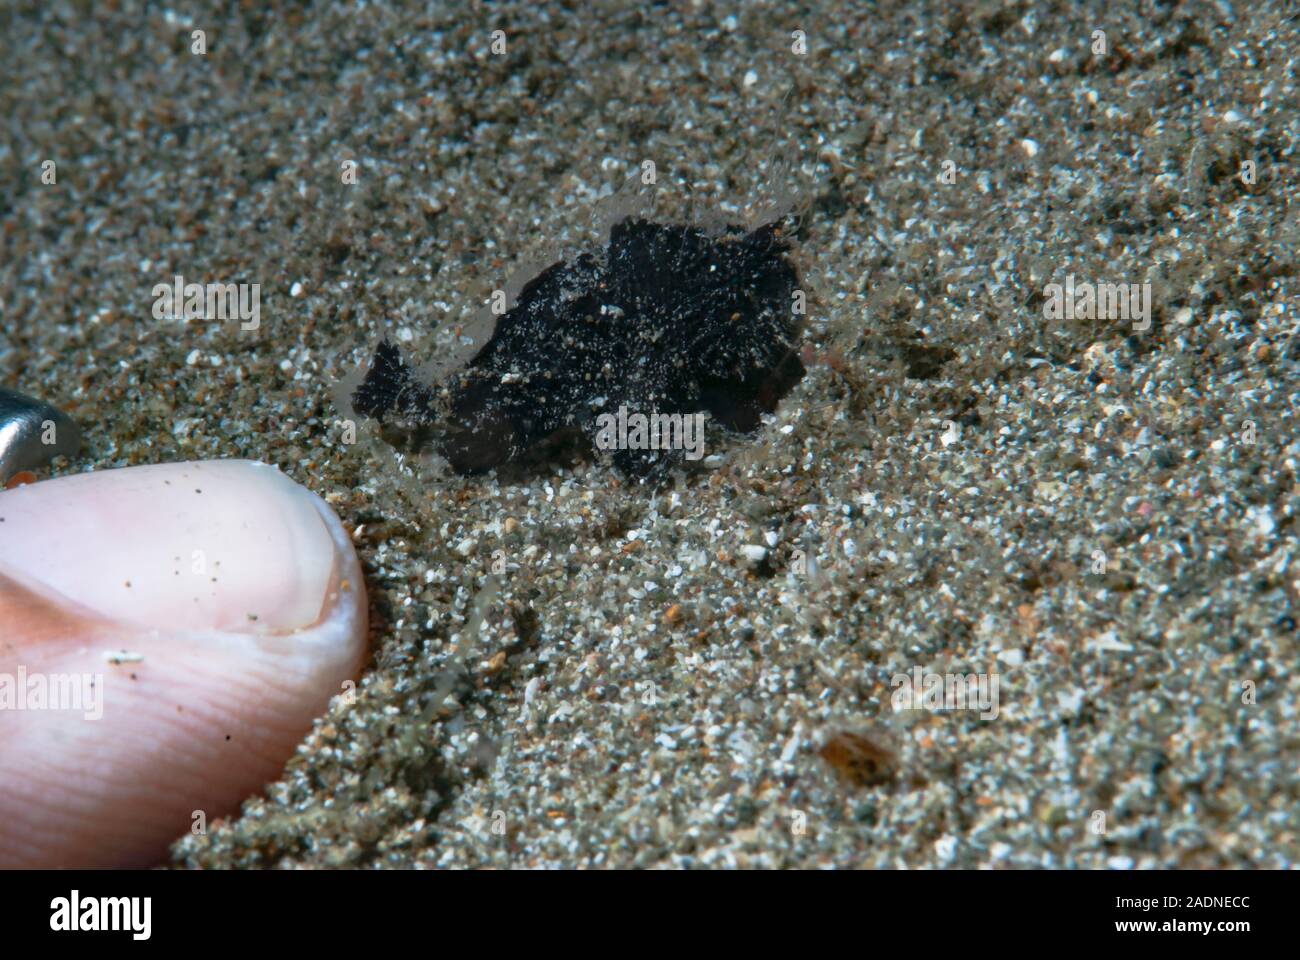 Juvenile Black Frogfish Stock Photo